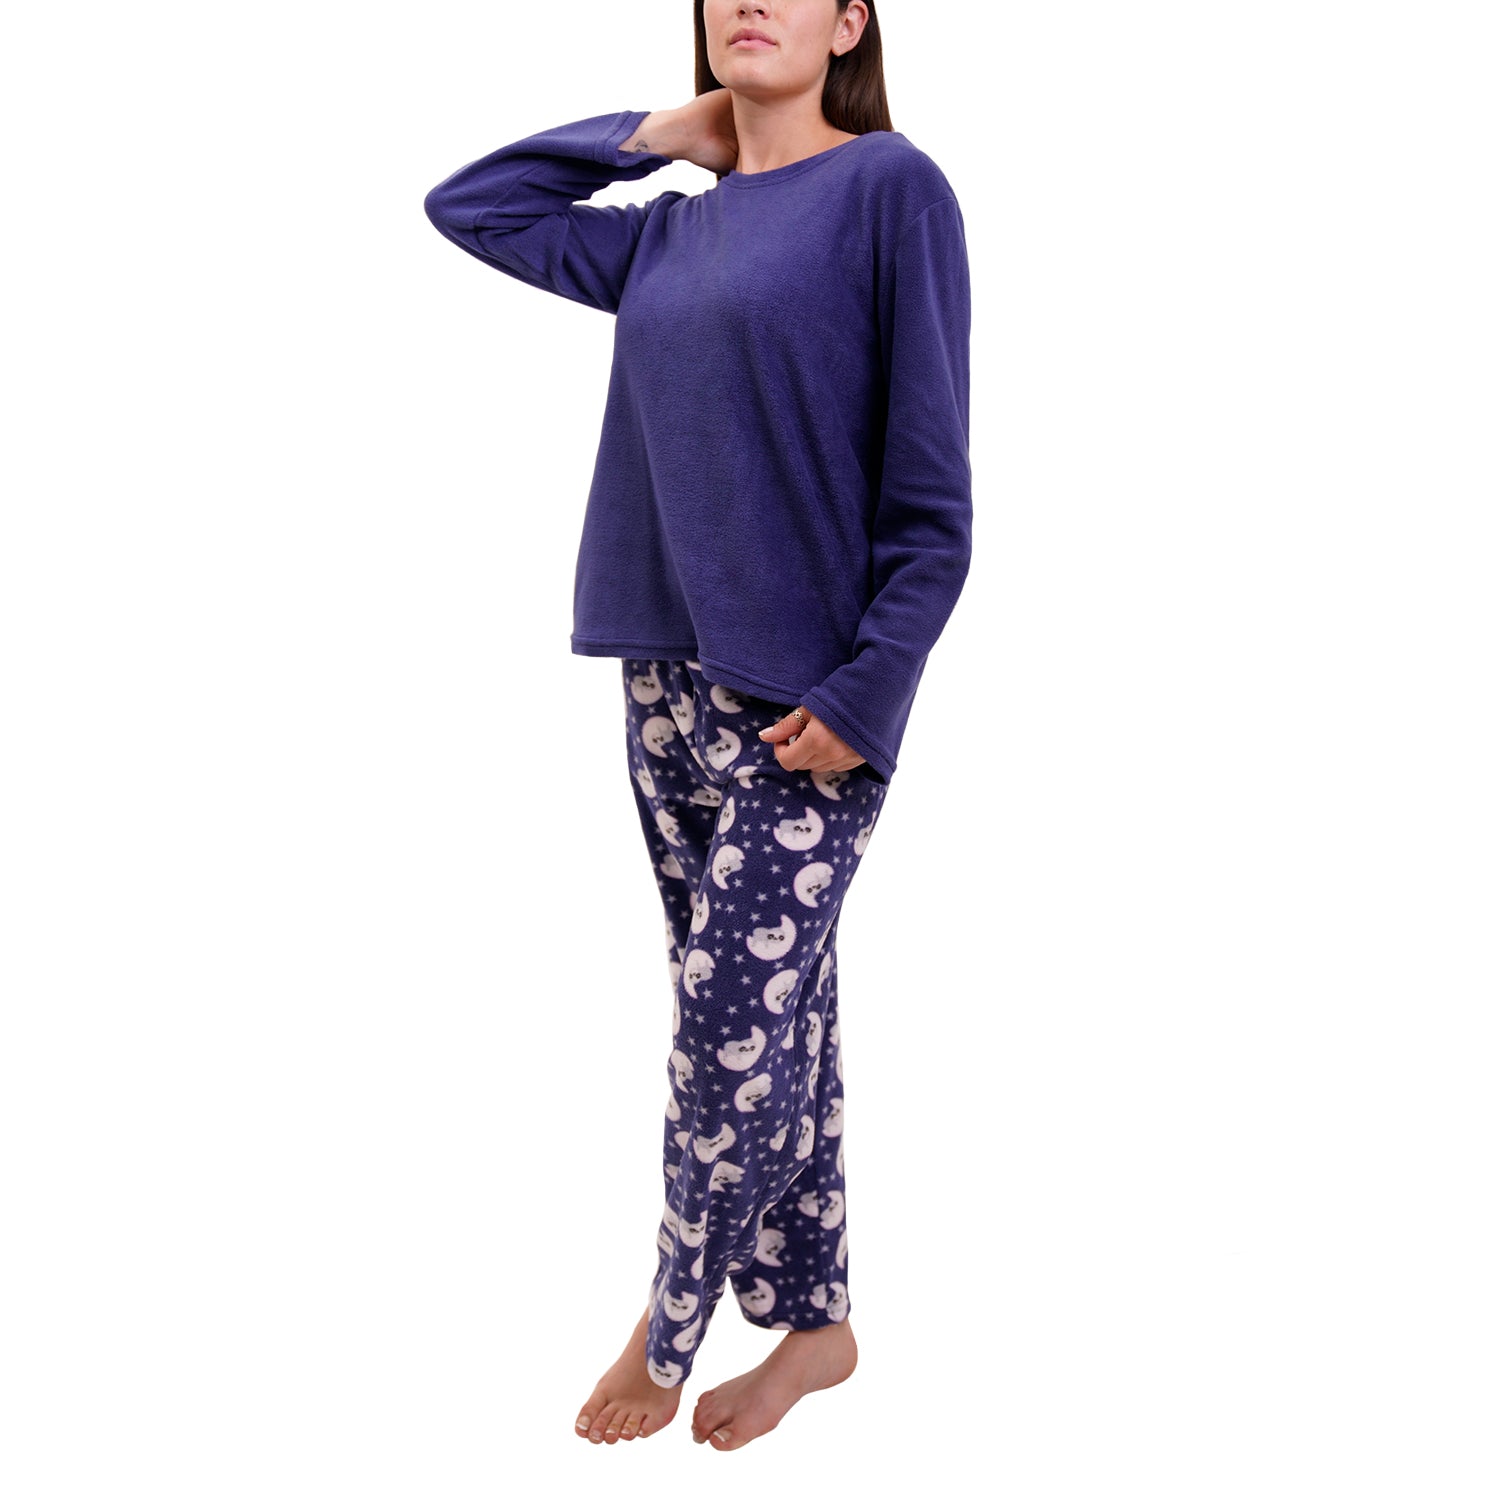 Pijama Micropolar Mujer 8530